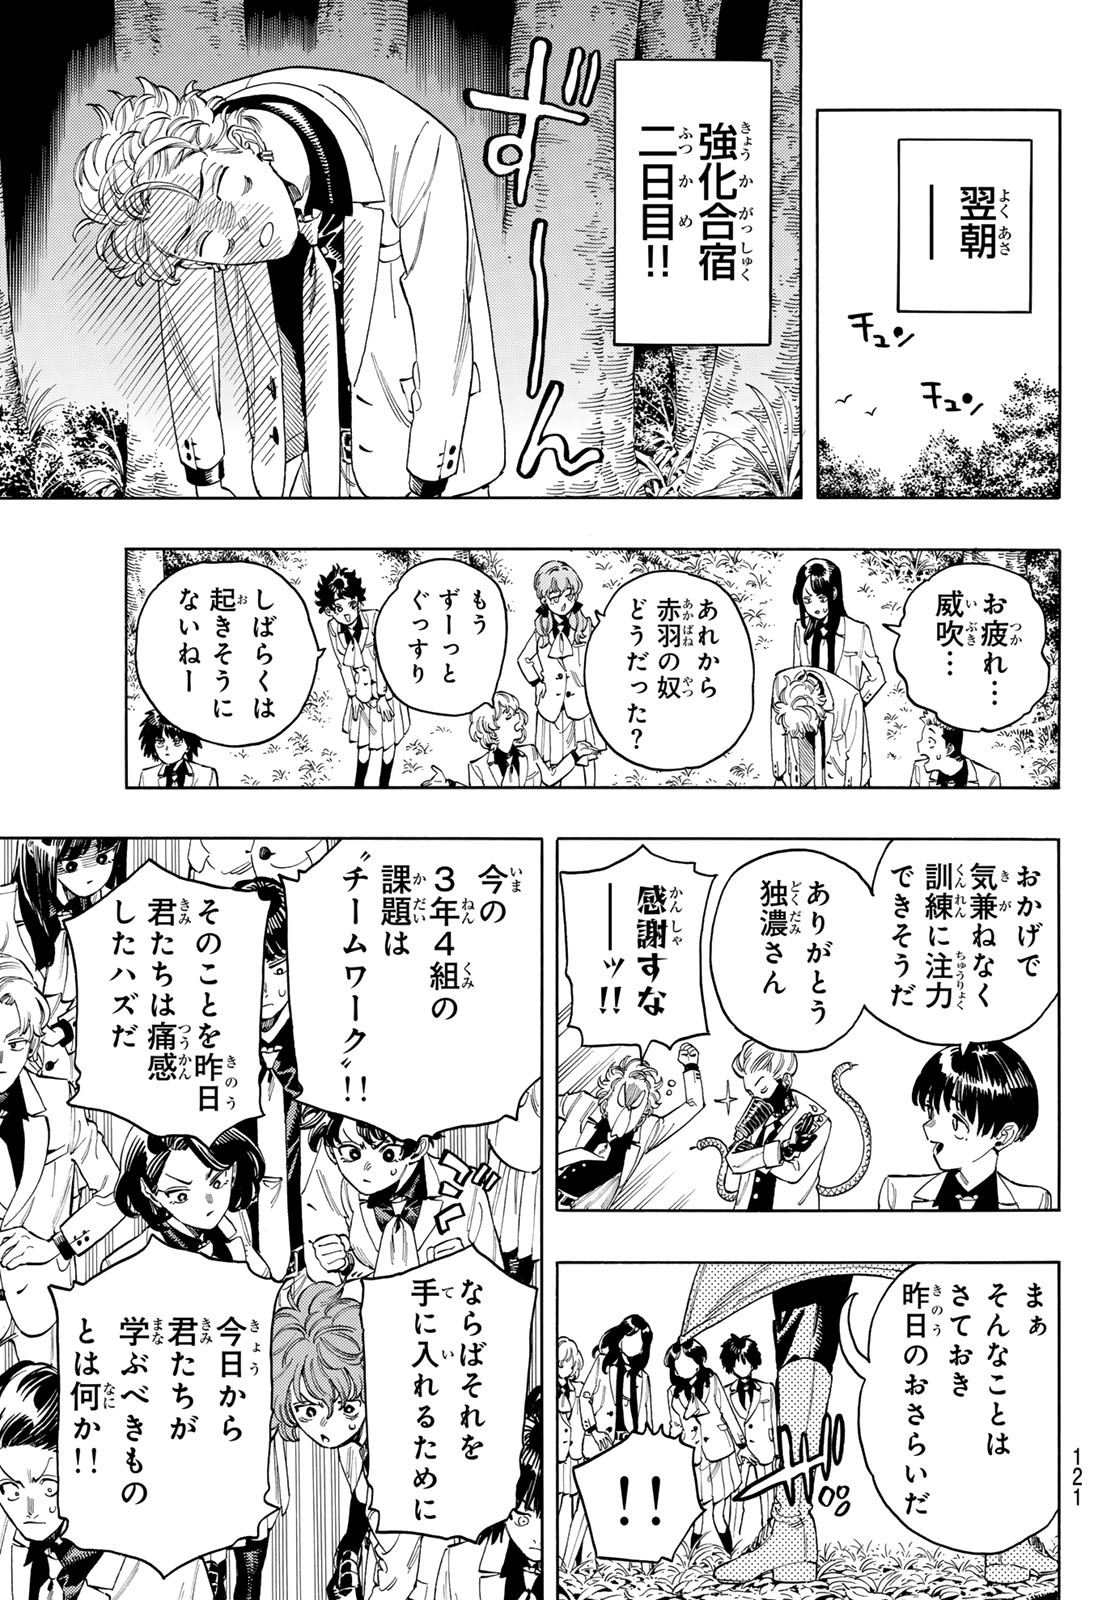 Akabane Honeko no Bodyguard - Chapter 87 - Page 10